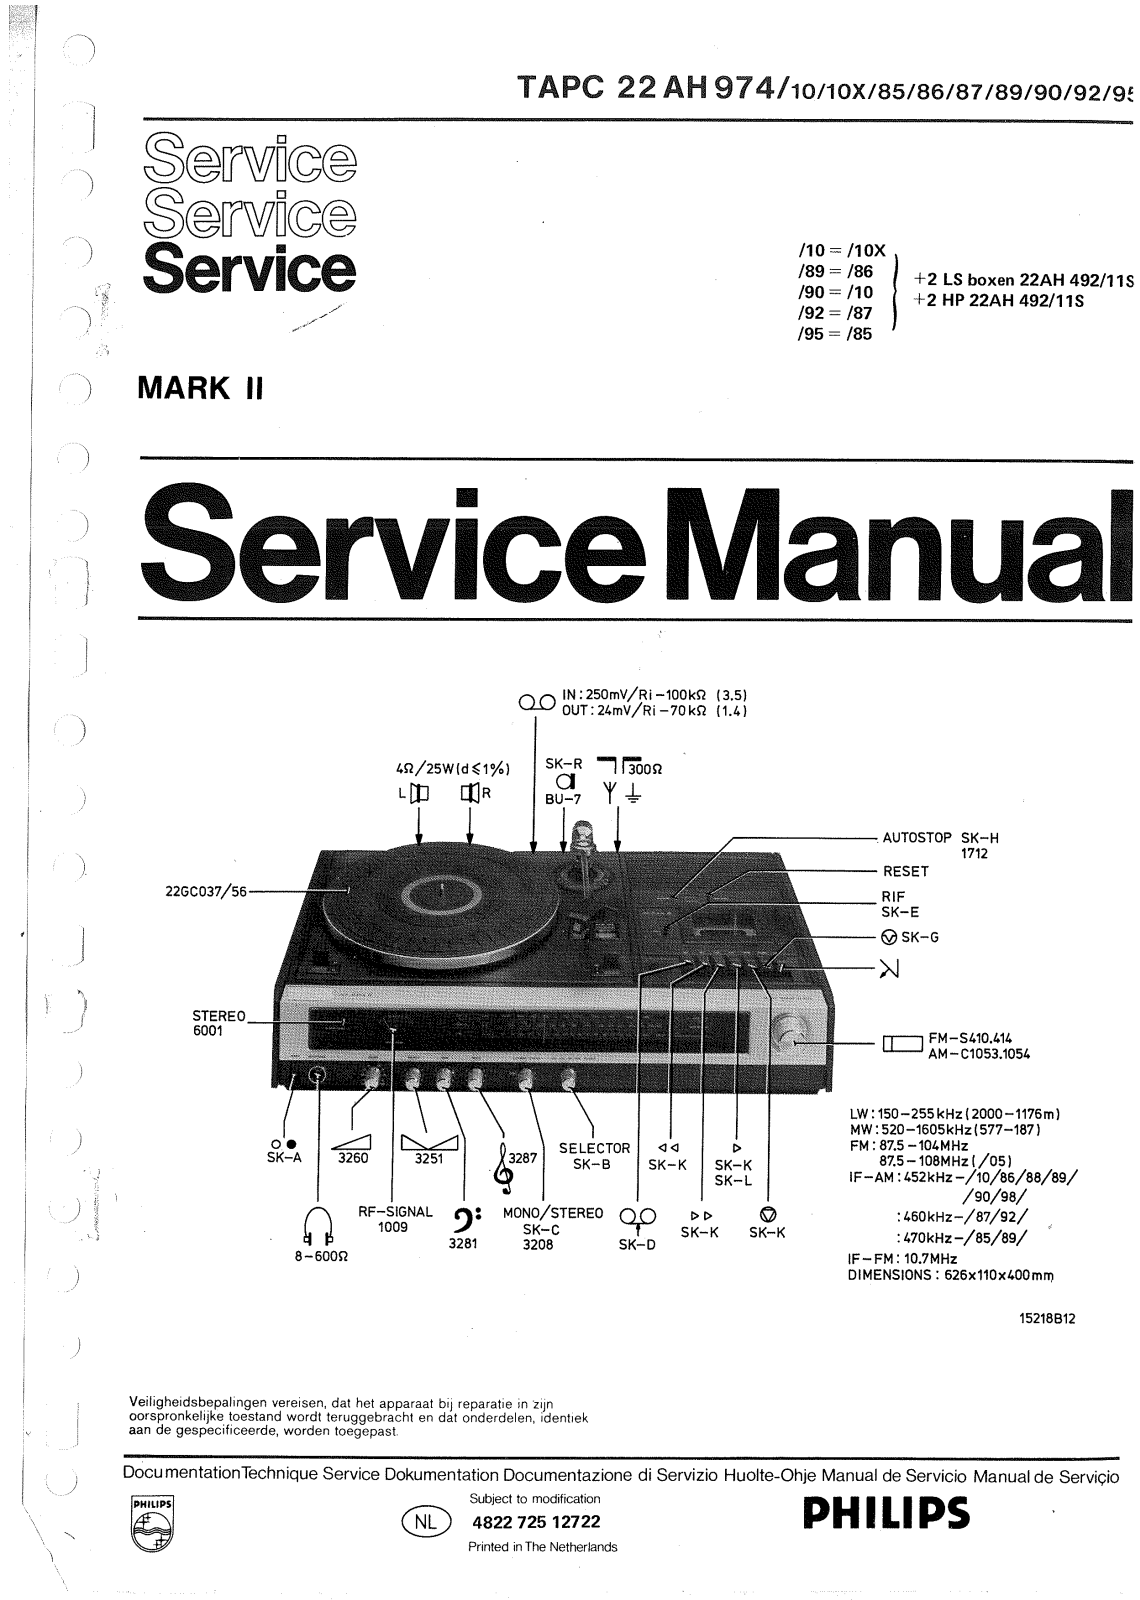 Philips 22-AH-974 Service Manual